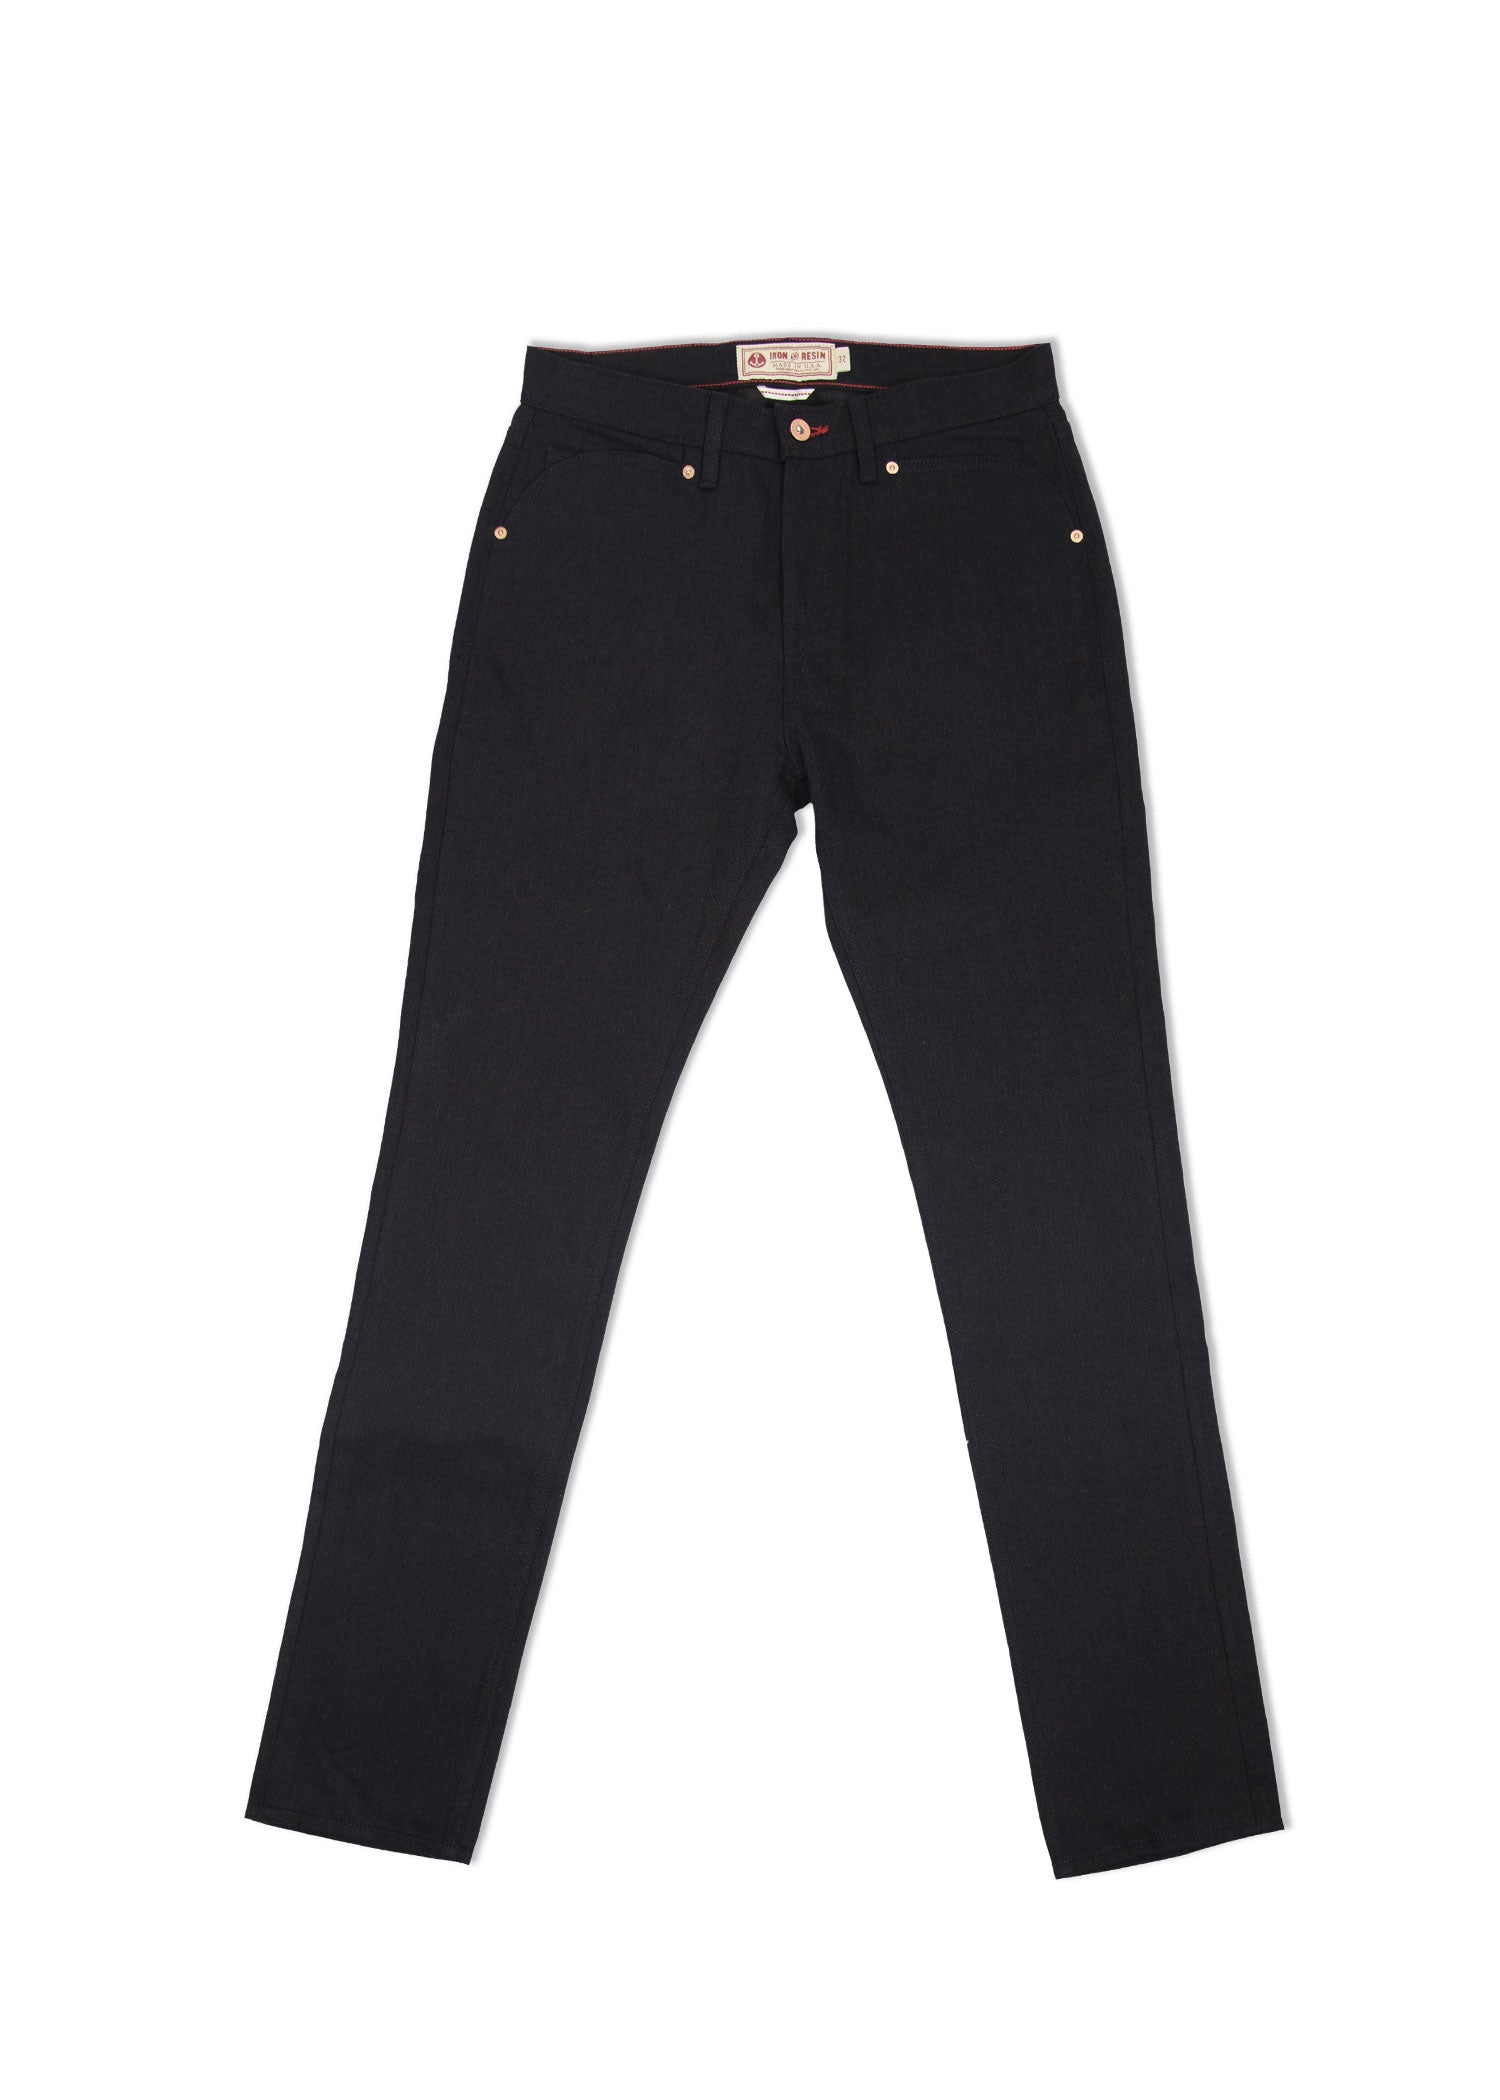 Enduro Denim Jeans in Black – Iron & Resin